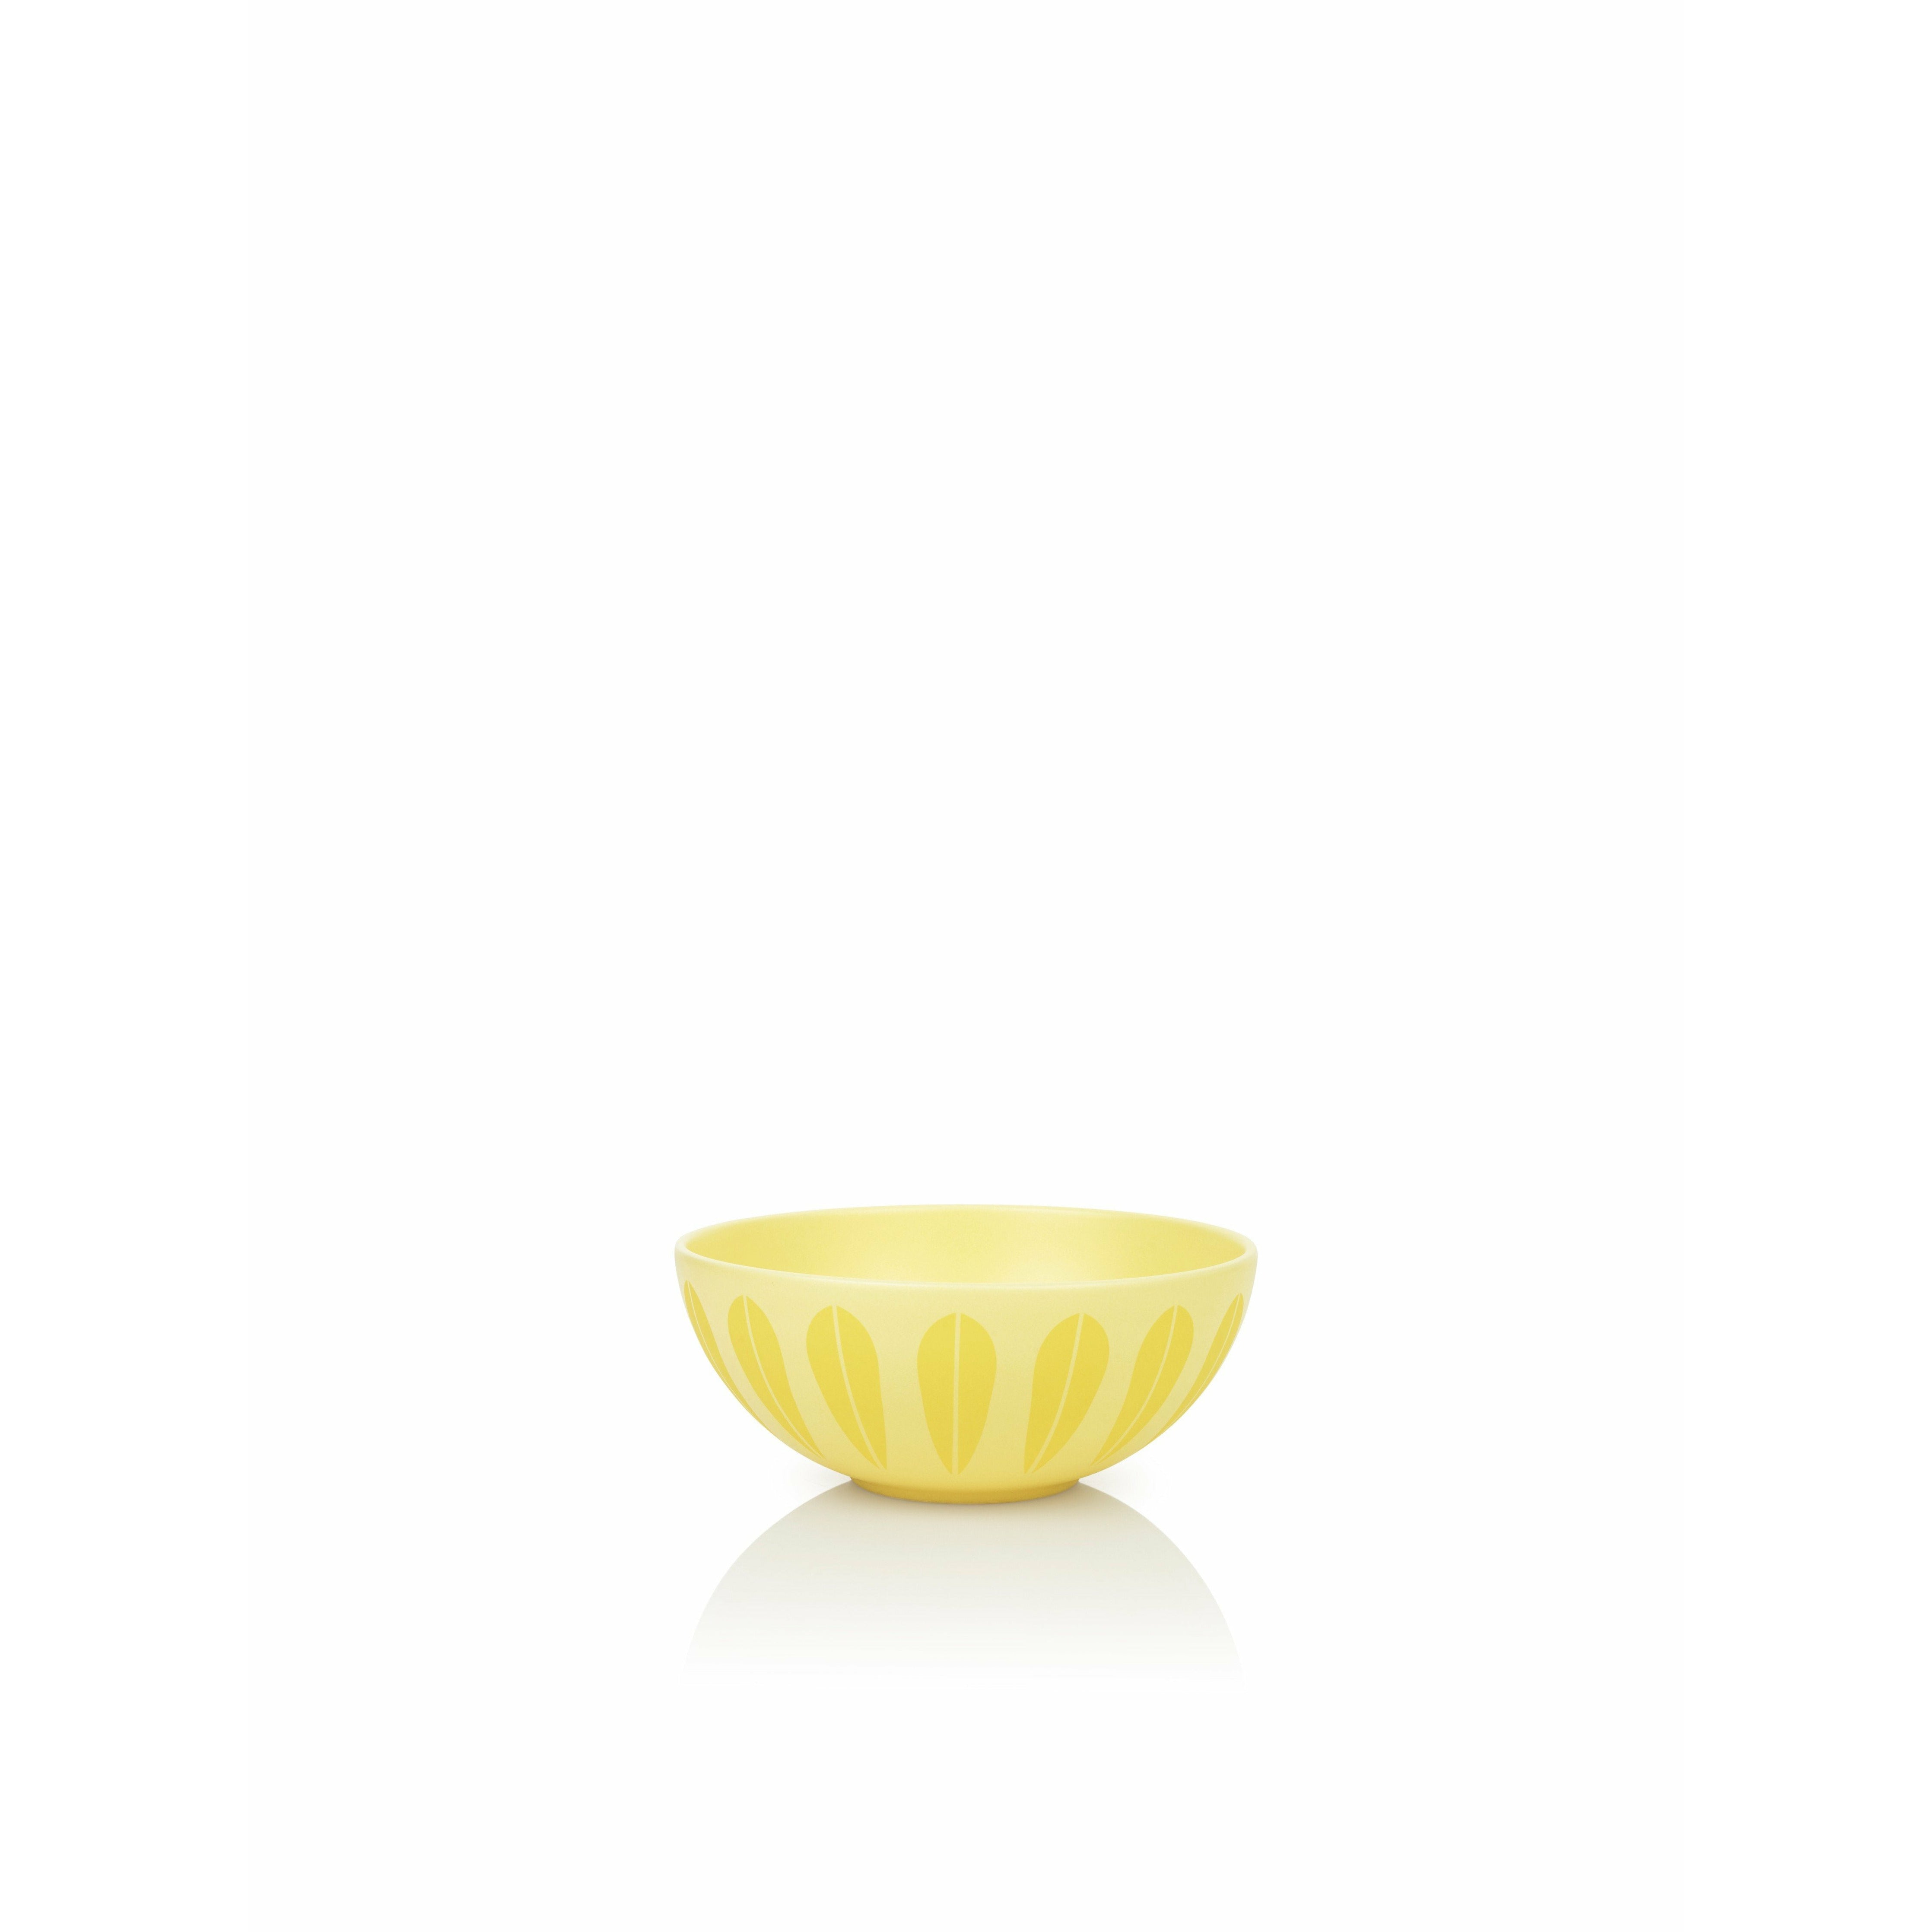 Lucie Kaas Arne Clausen Lotus Bowl gul, ø18cm